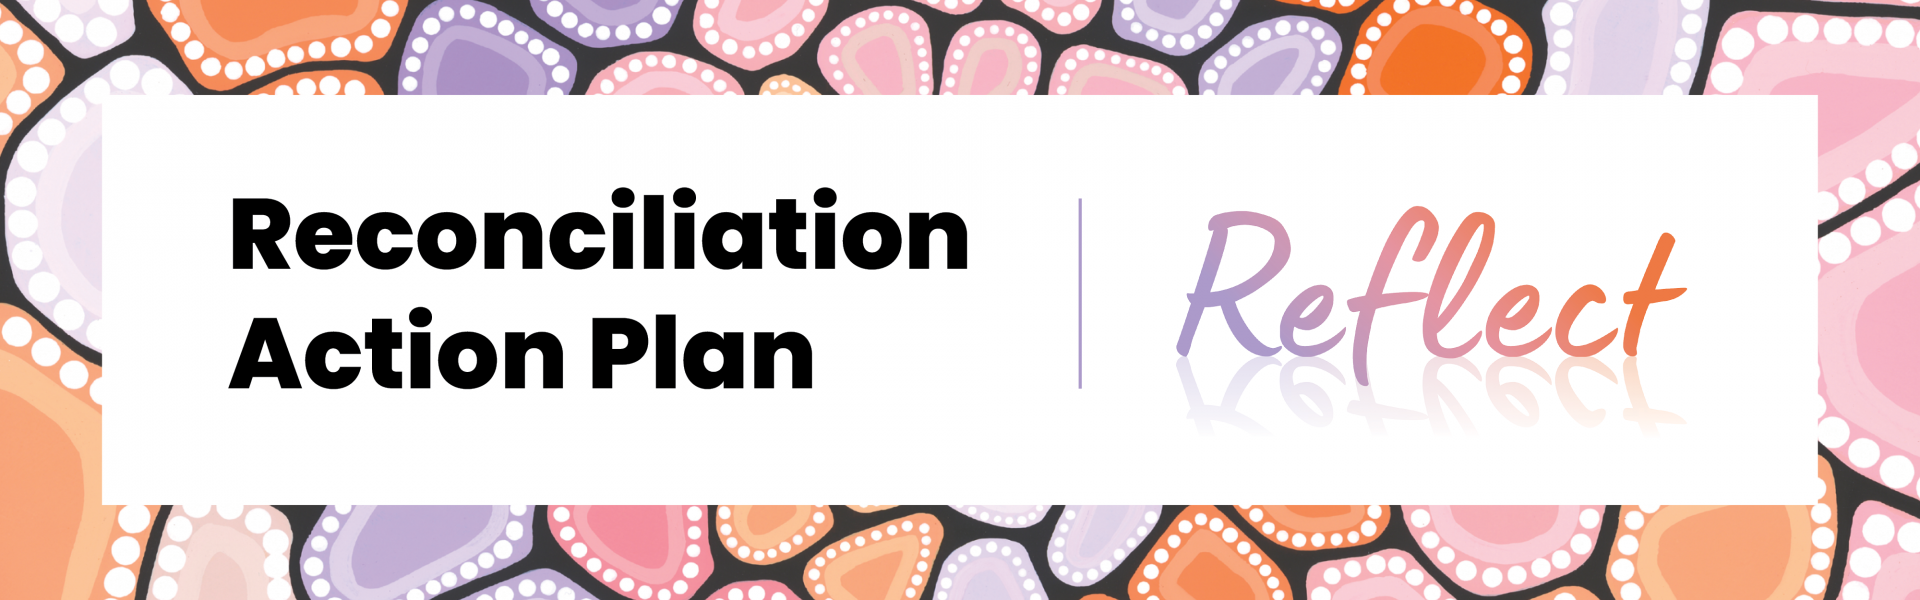 Communities@Work Reconciliation Action Plan